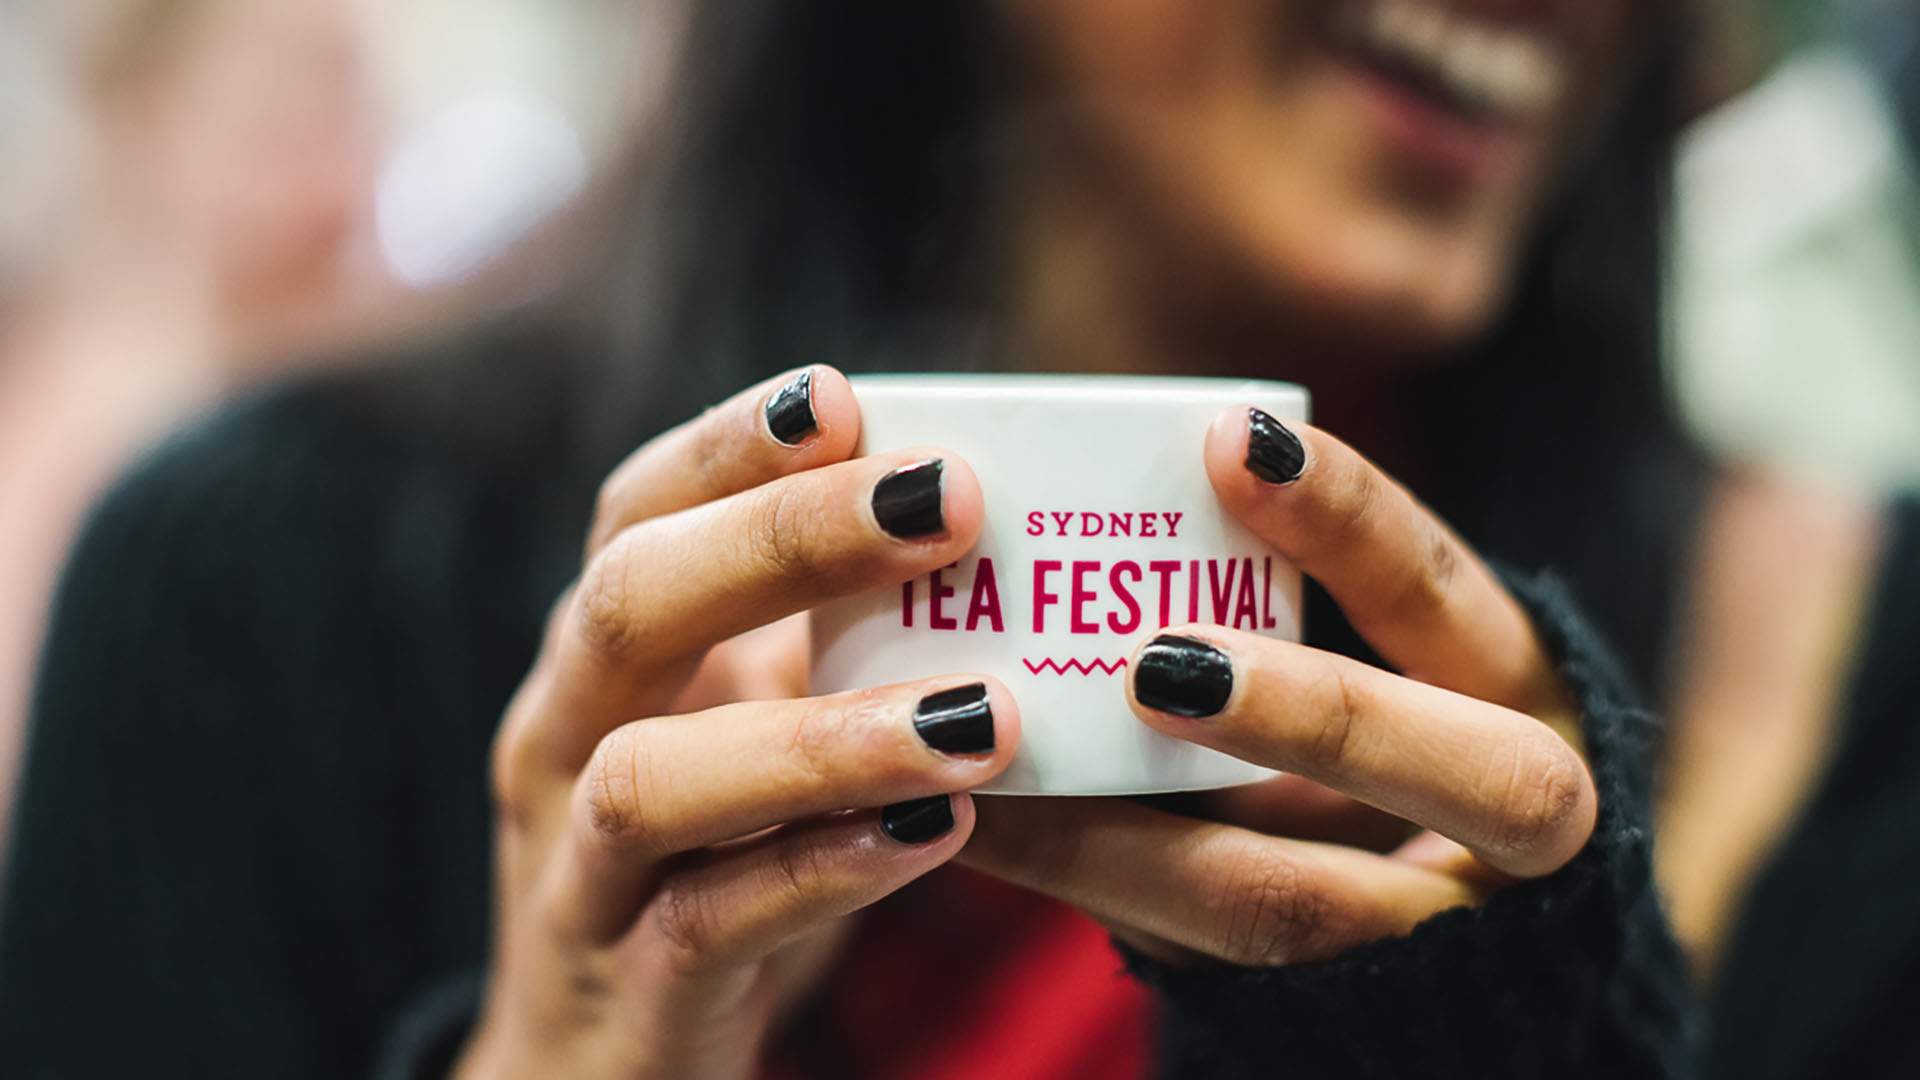 SYDNEY TEA FESTIVAL 2019